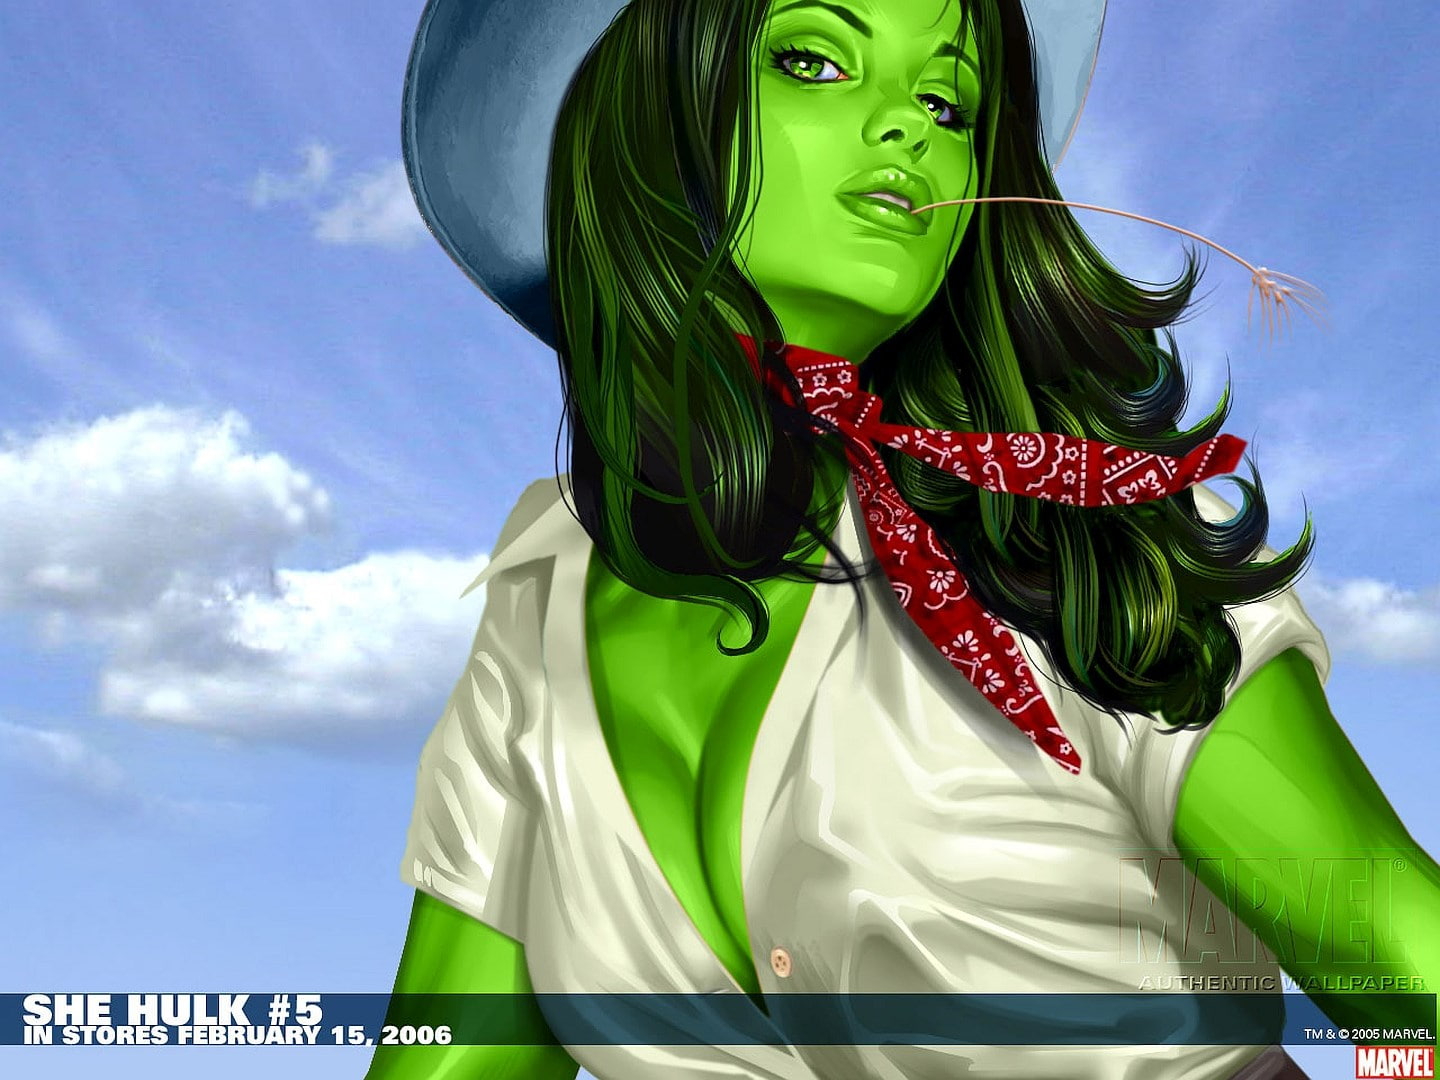 Wallpaper She Hulk 1440x1080px 720p Free Download, She Hulk, Movies